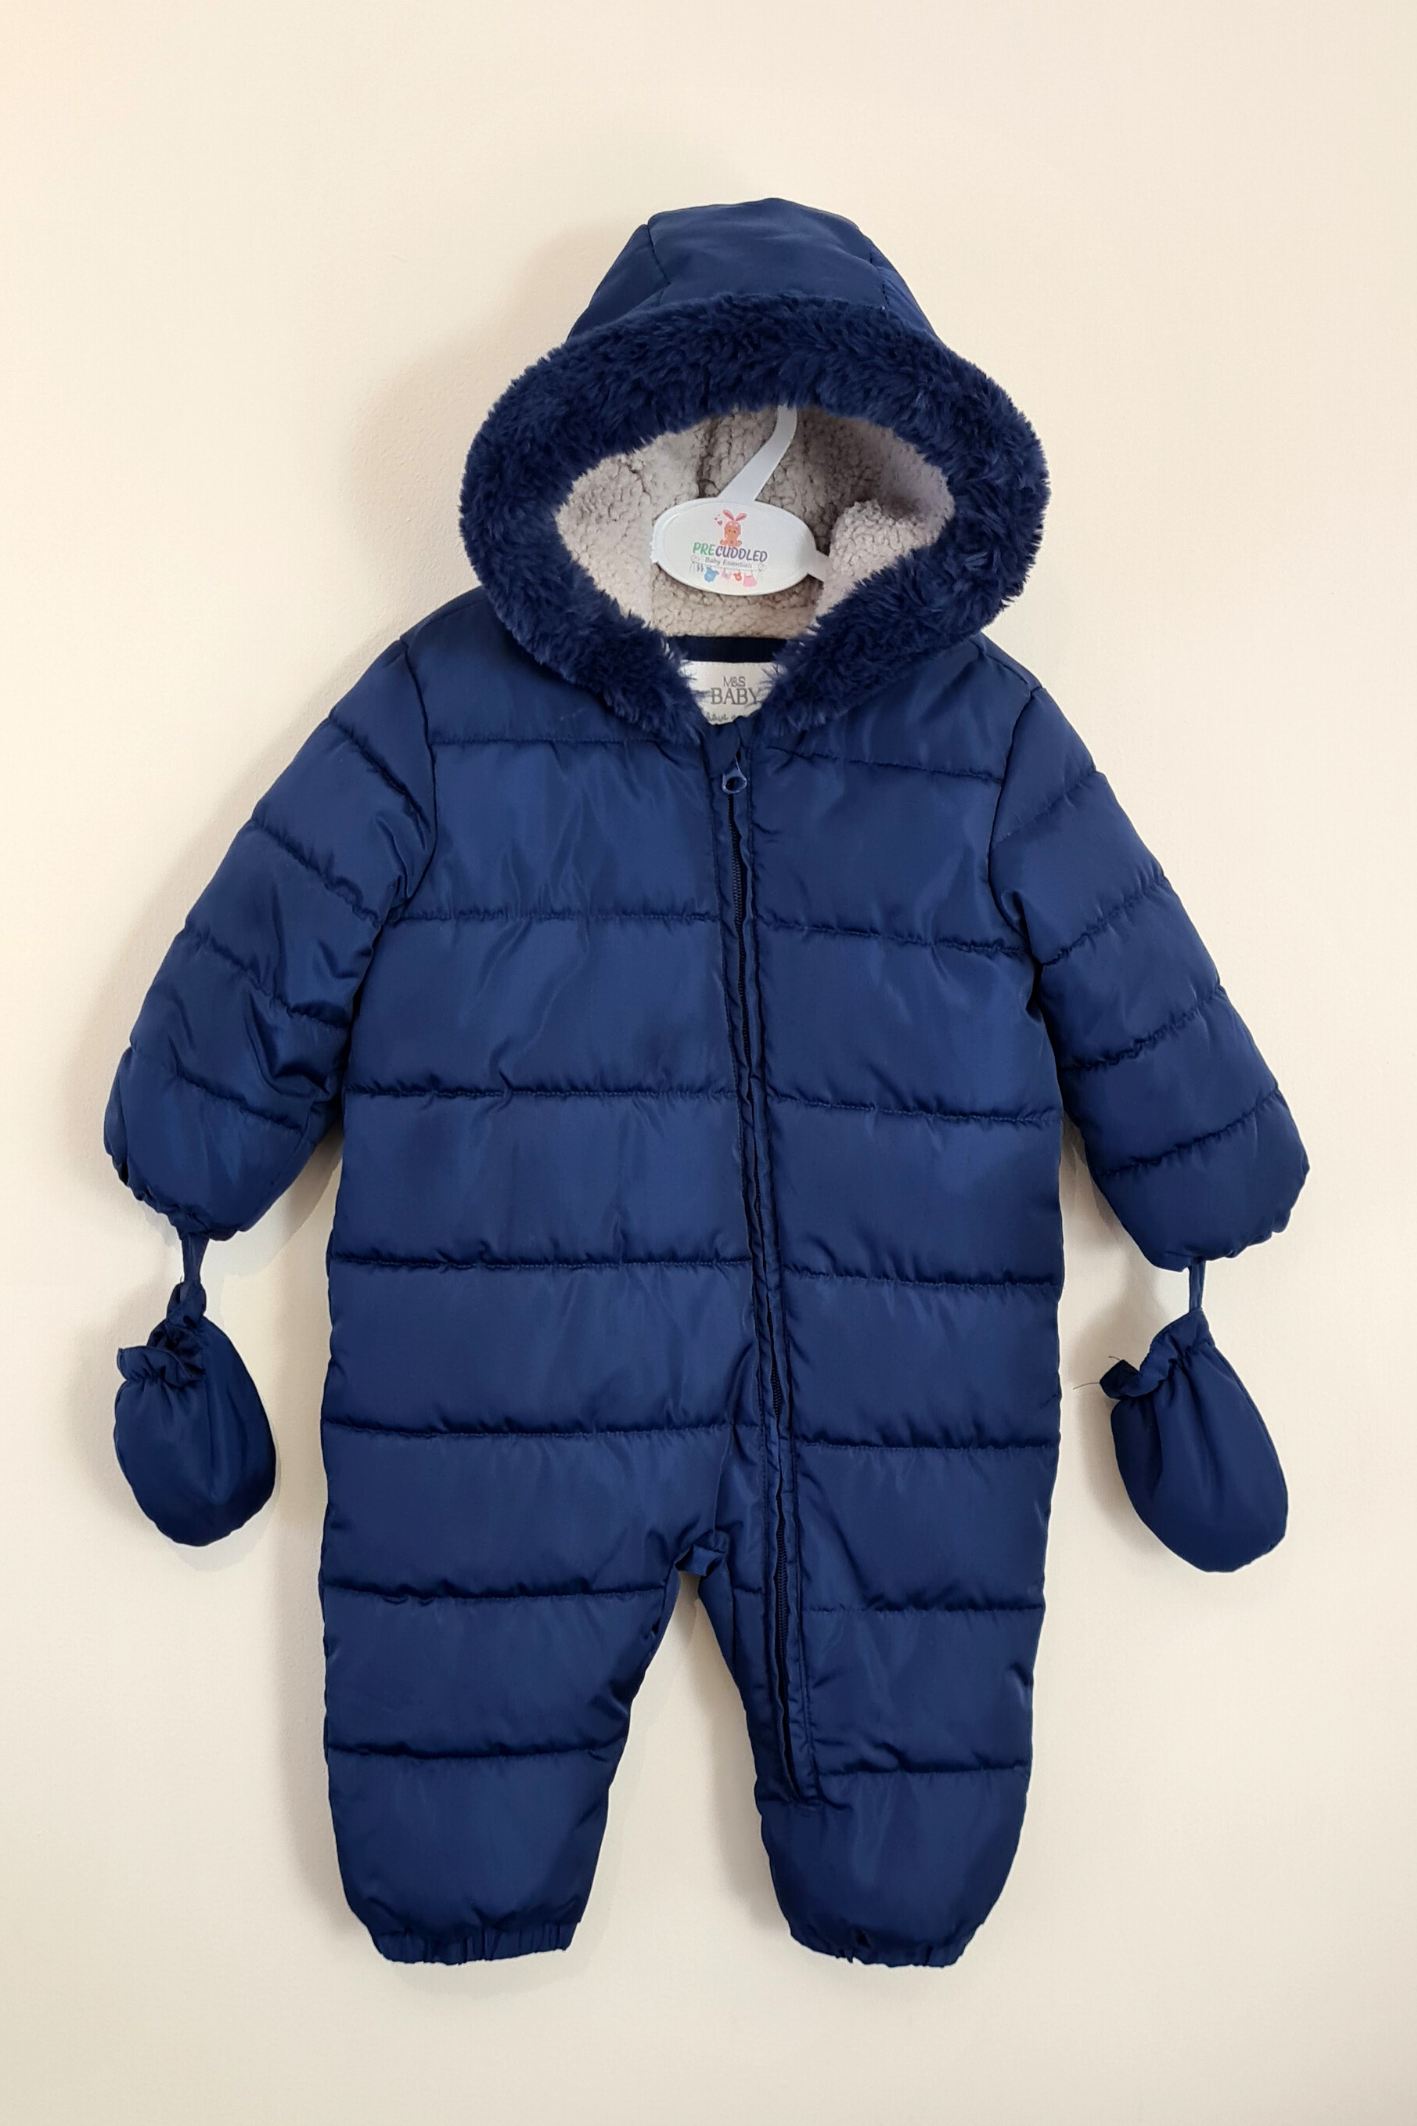 12-18m - Navy Fur Trim Snowsuit & Mittens (M&S)